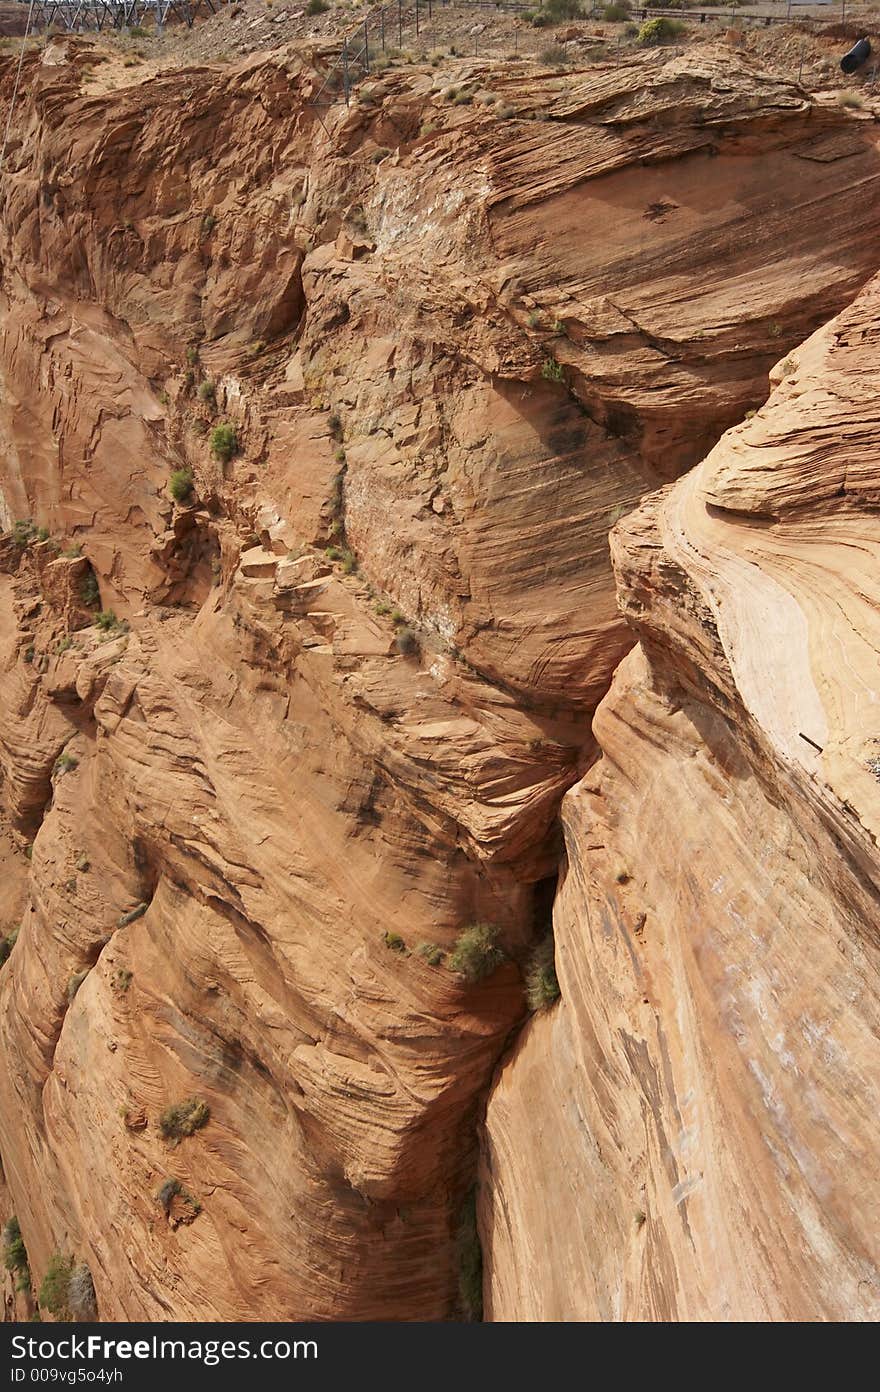 Red rock in arizona, usa - portrait format